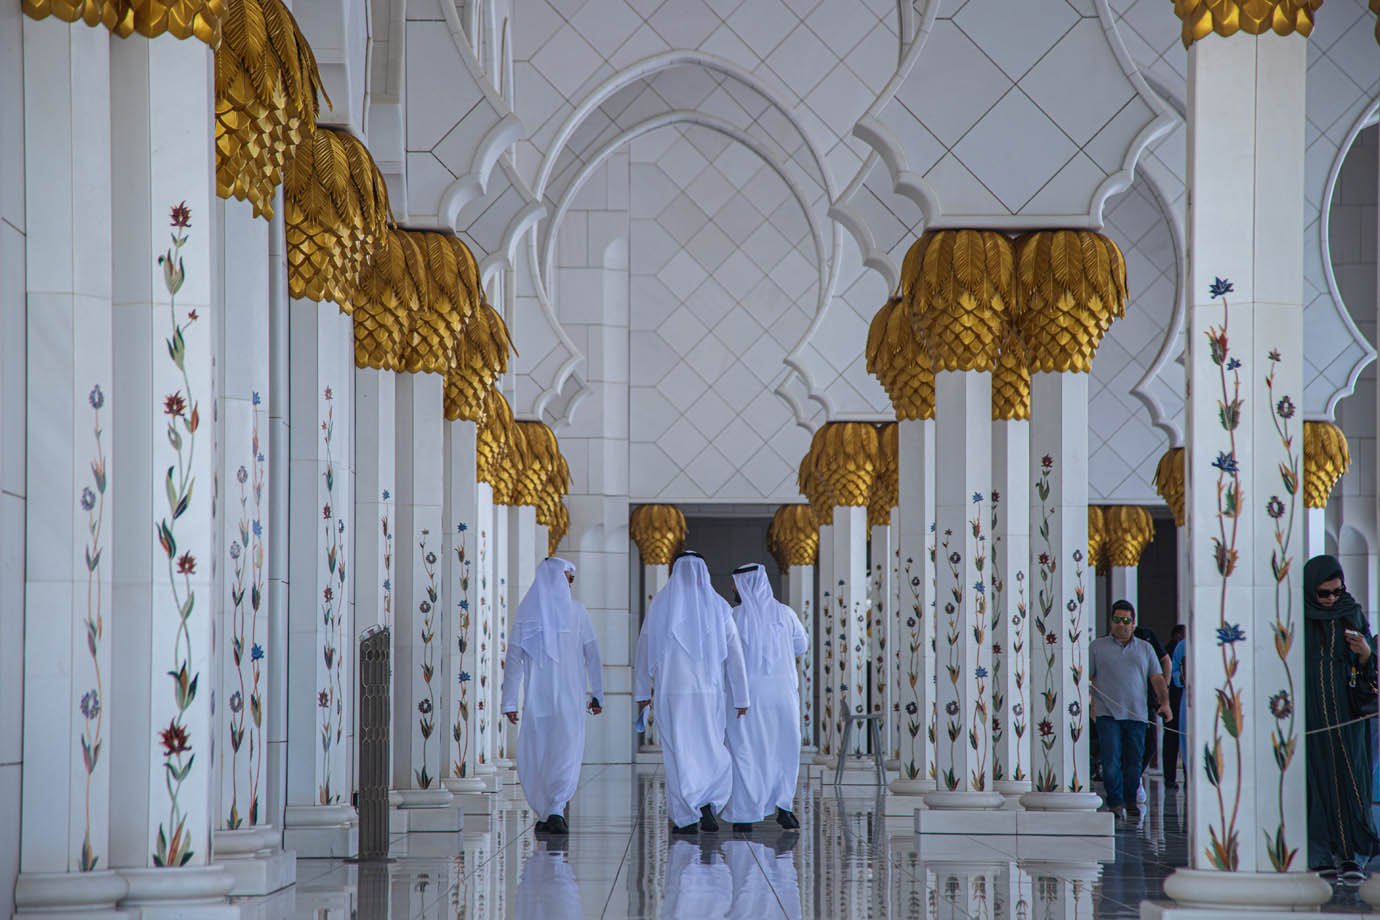 Abu Dhabi, Grande Mesquita Sheikh Zayed nos Emirados Ararabis

Foto: Leandro Fonseca
Data: 07/12/2023